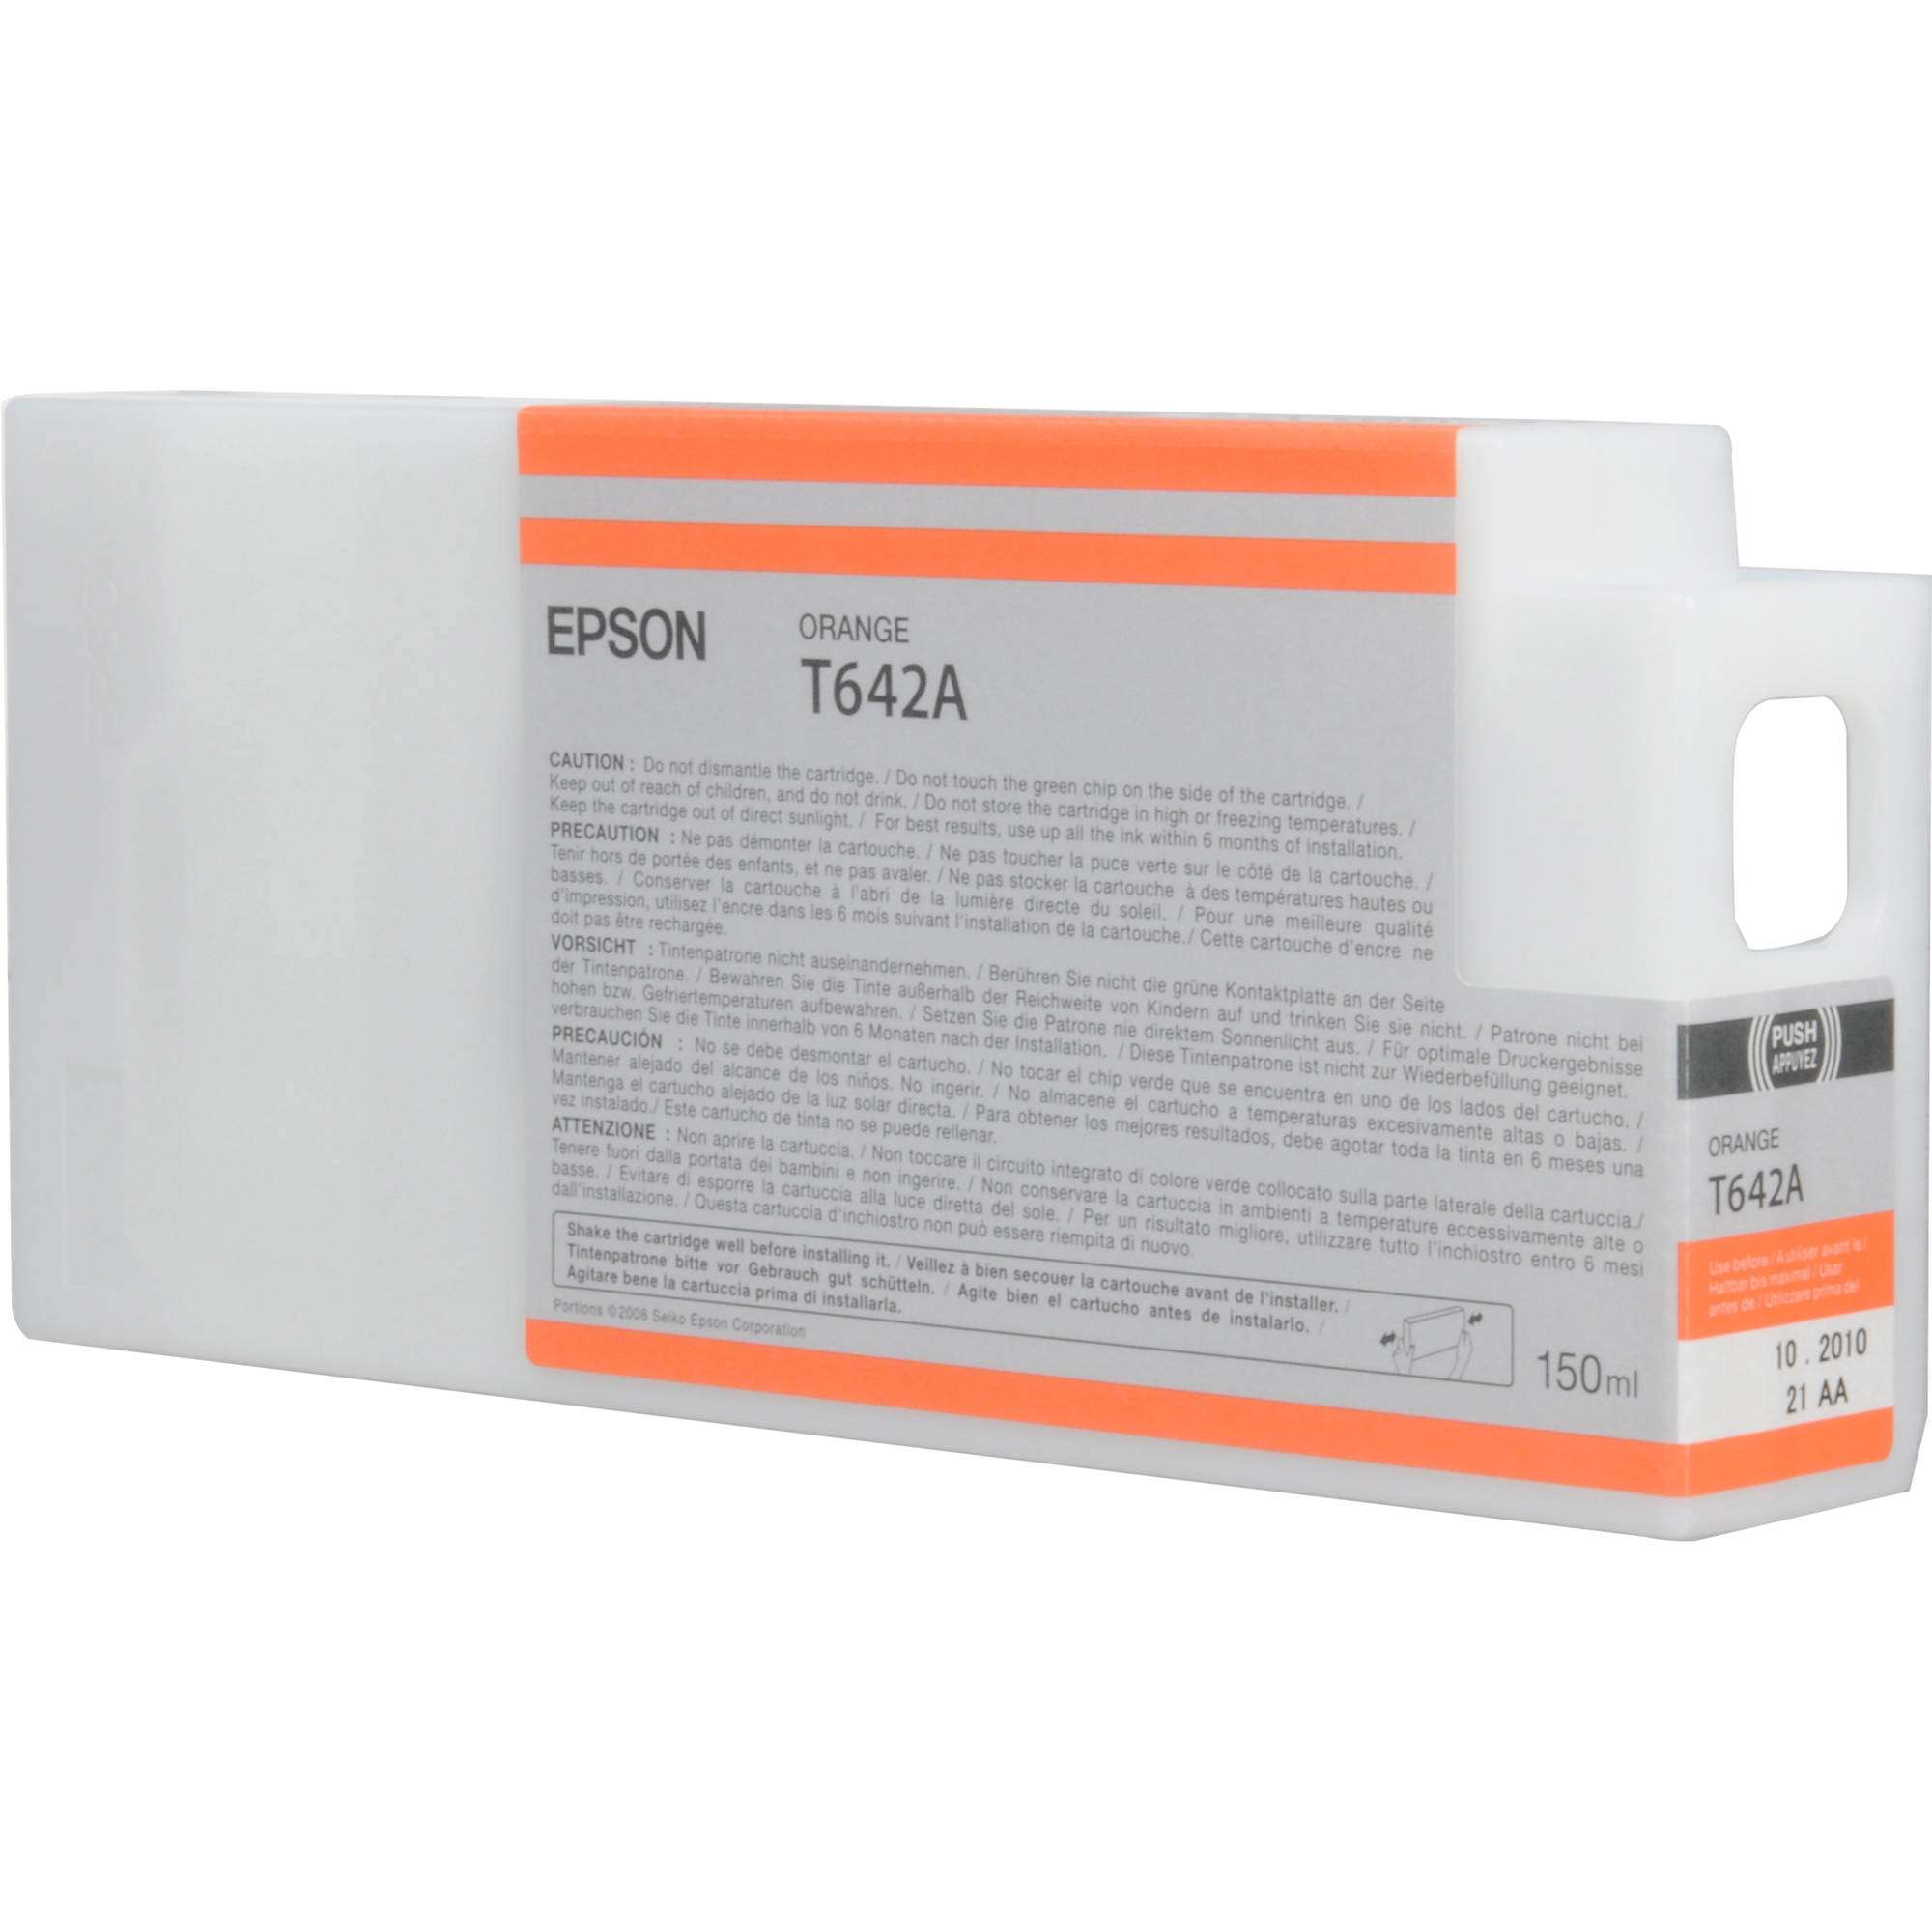 Epson UltraChrome, Orange HDR Ink cartridge (150ml)